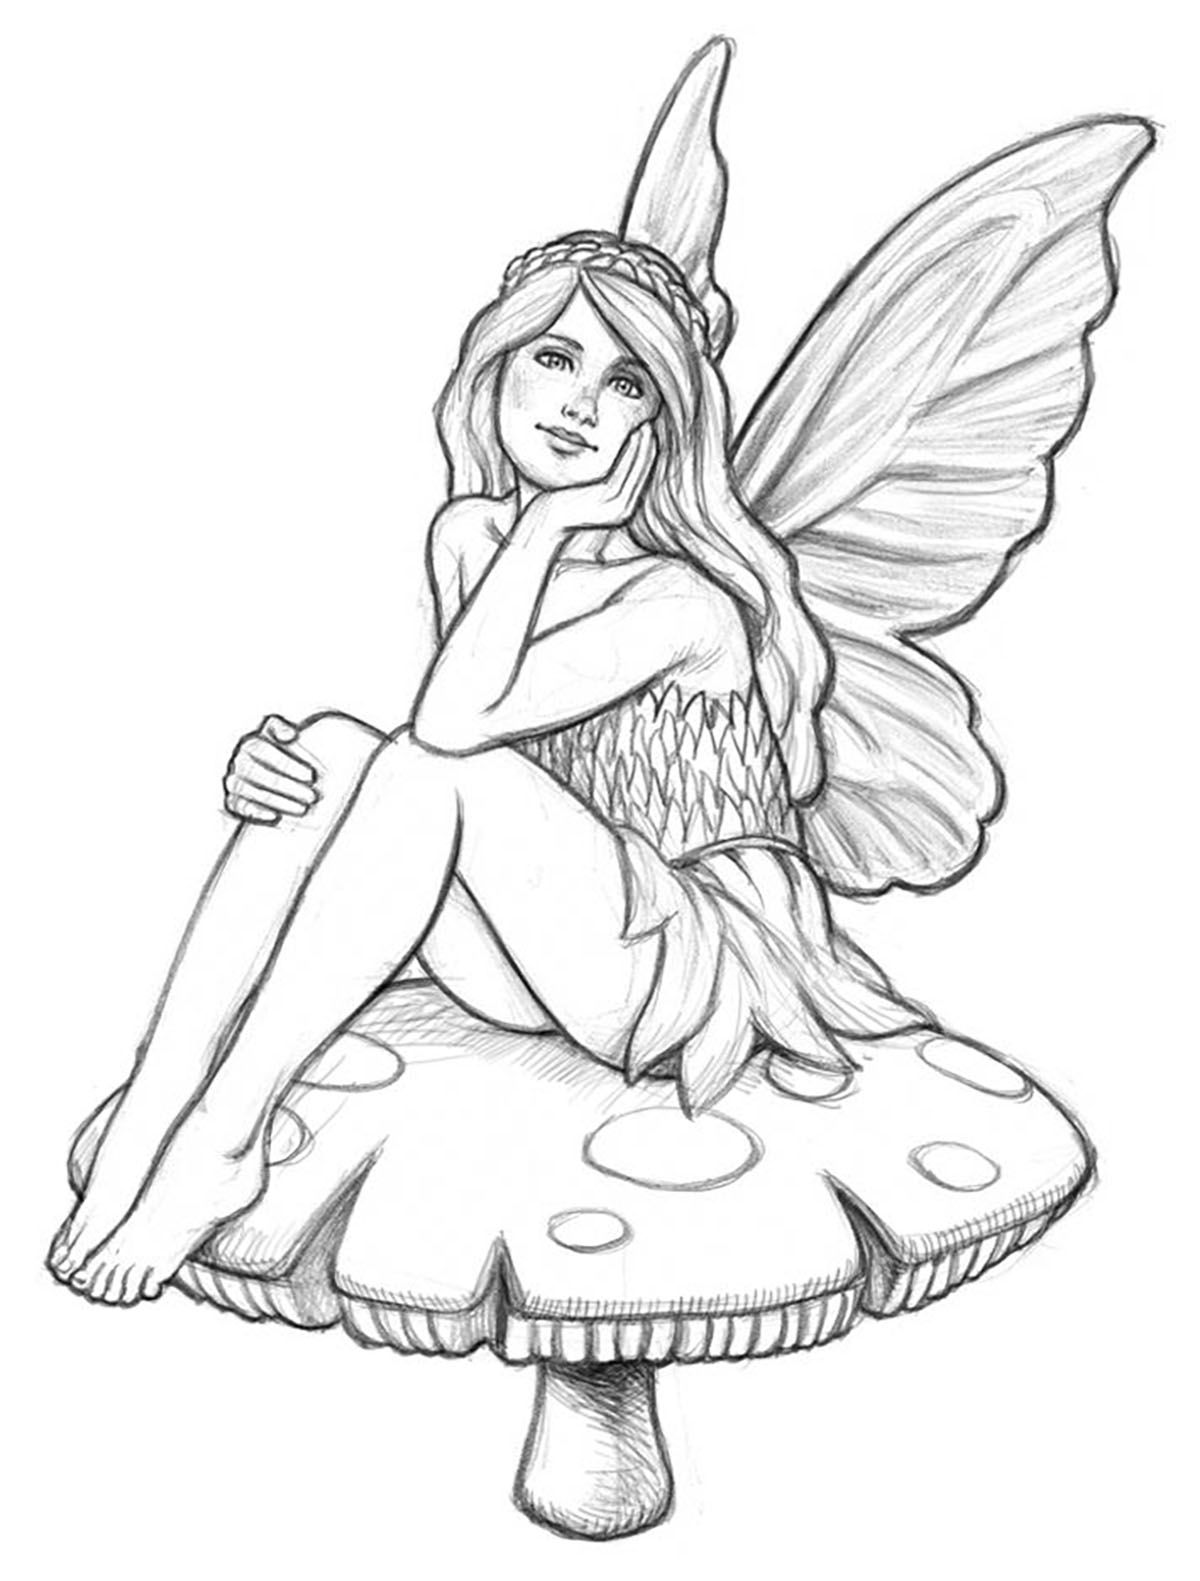 Fairy in her dreams